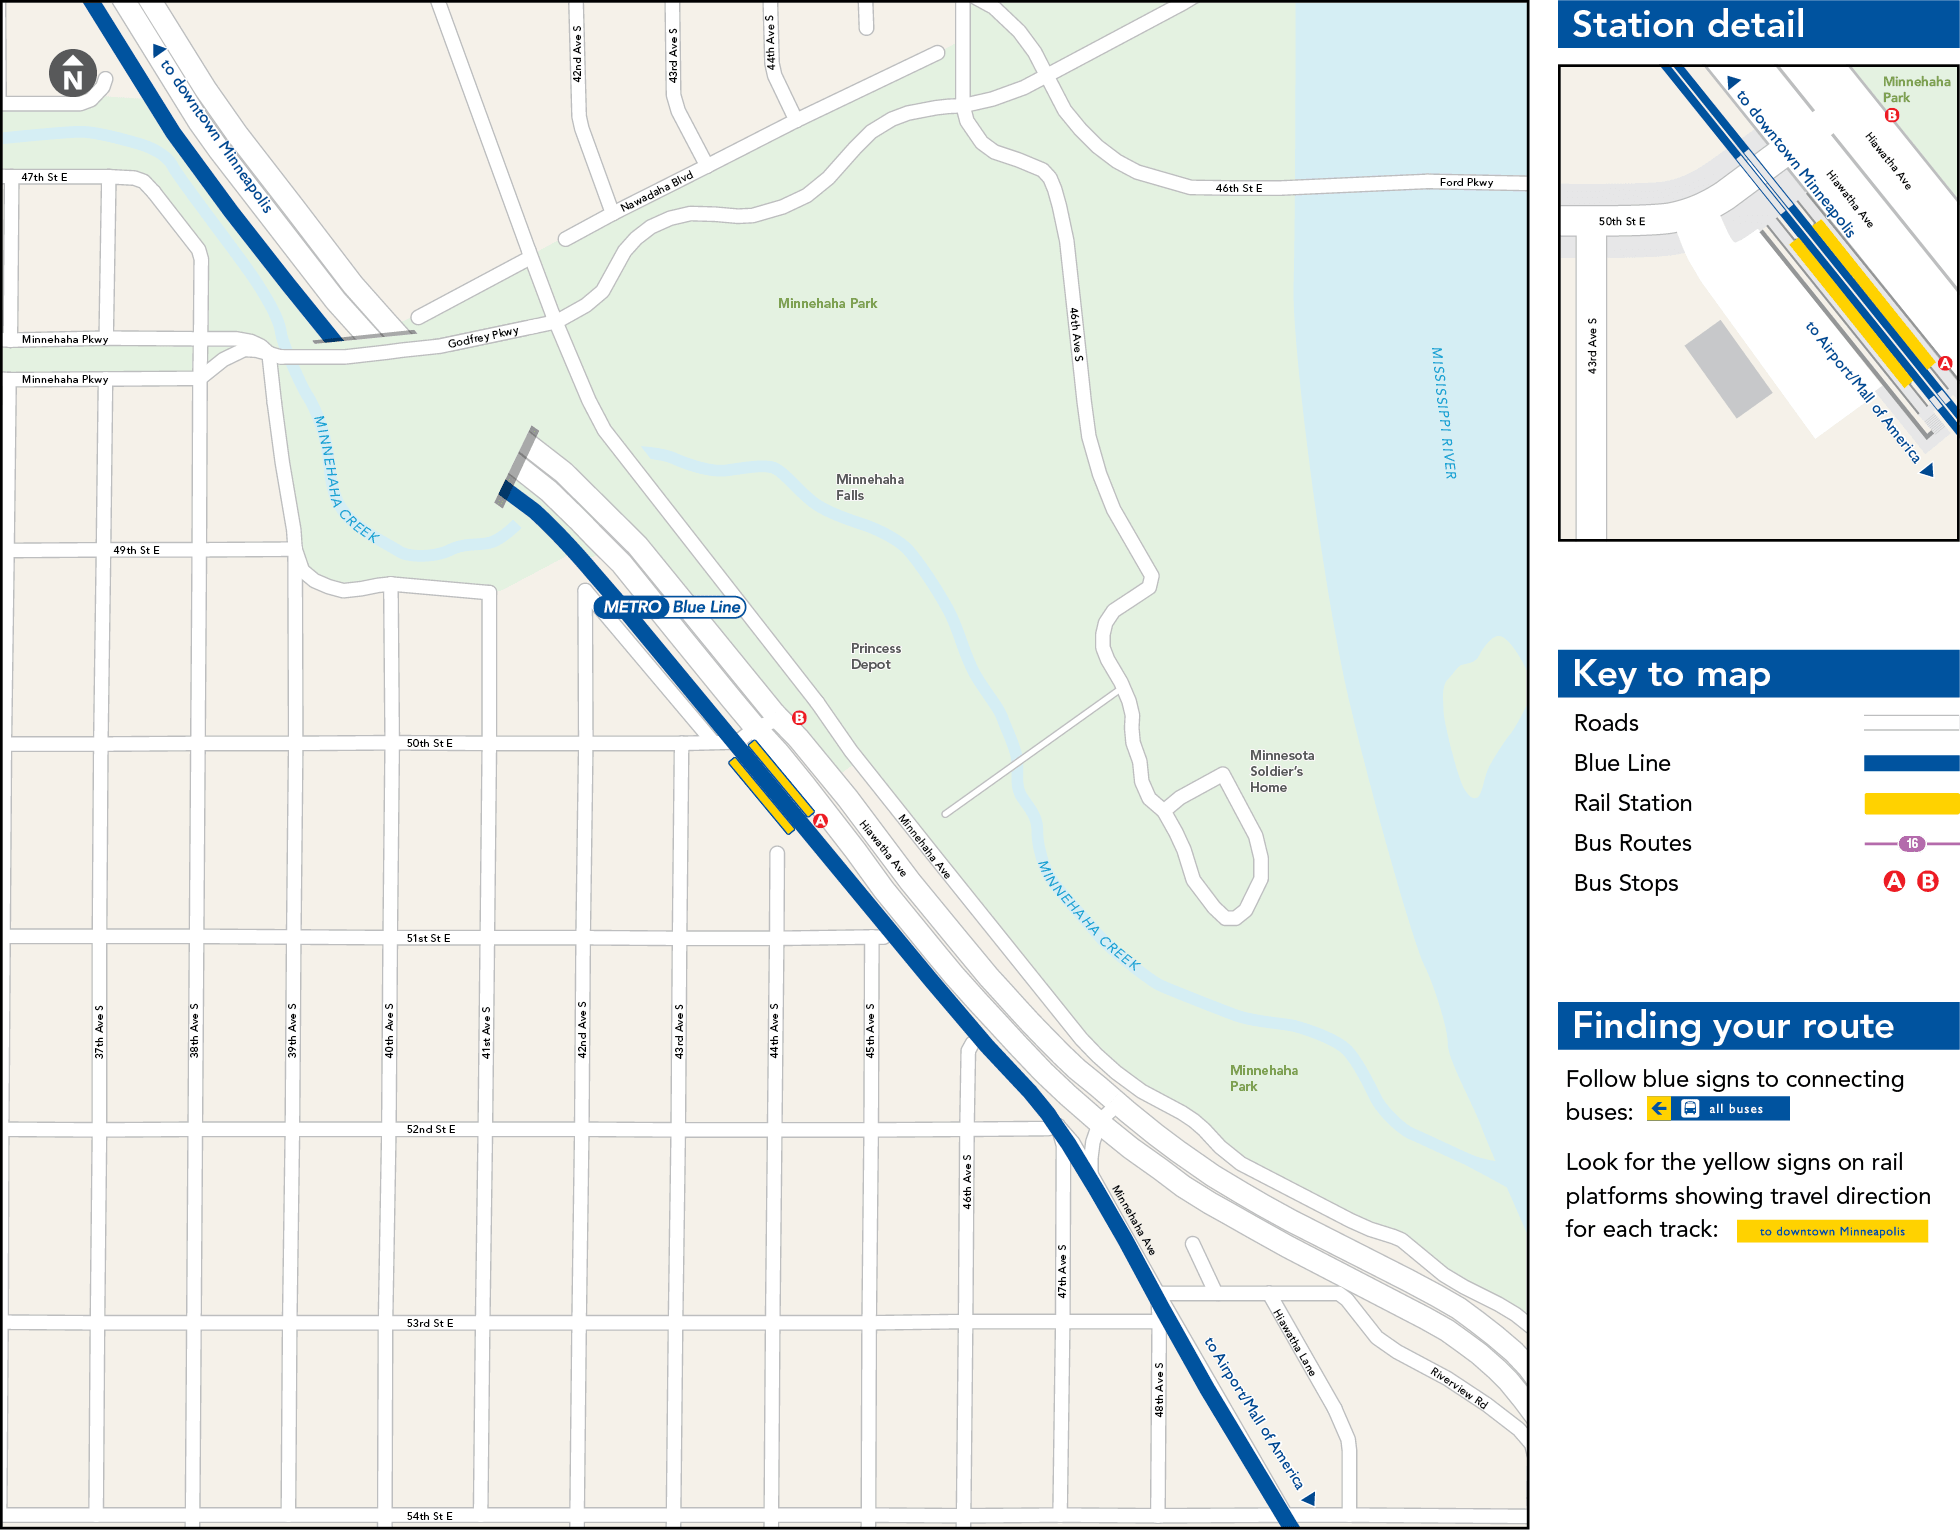 50th Street - Minnehaha Park Station Map